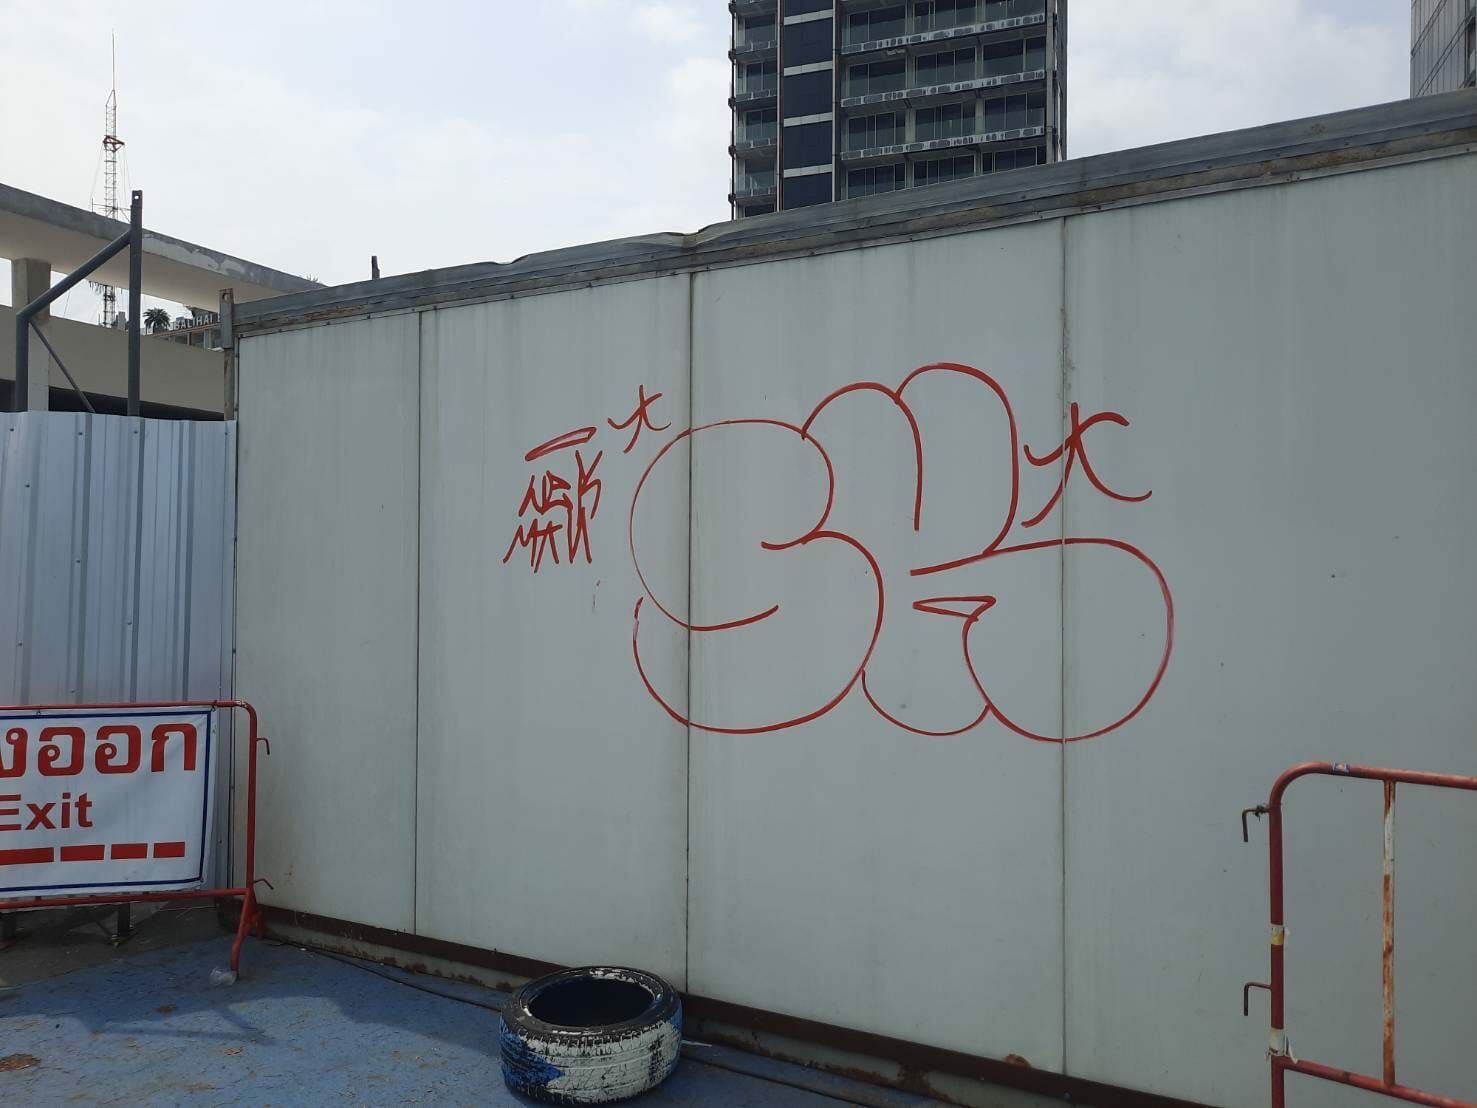 Pattaya mayor takes personal action against increasing graffiti vandalism | News by Thaiger